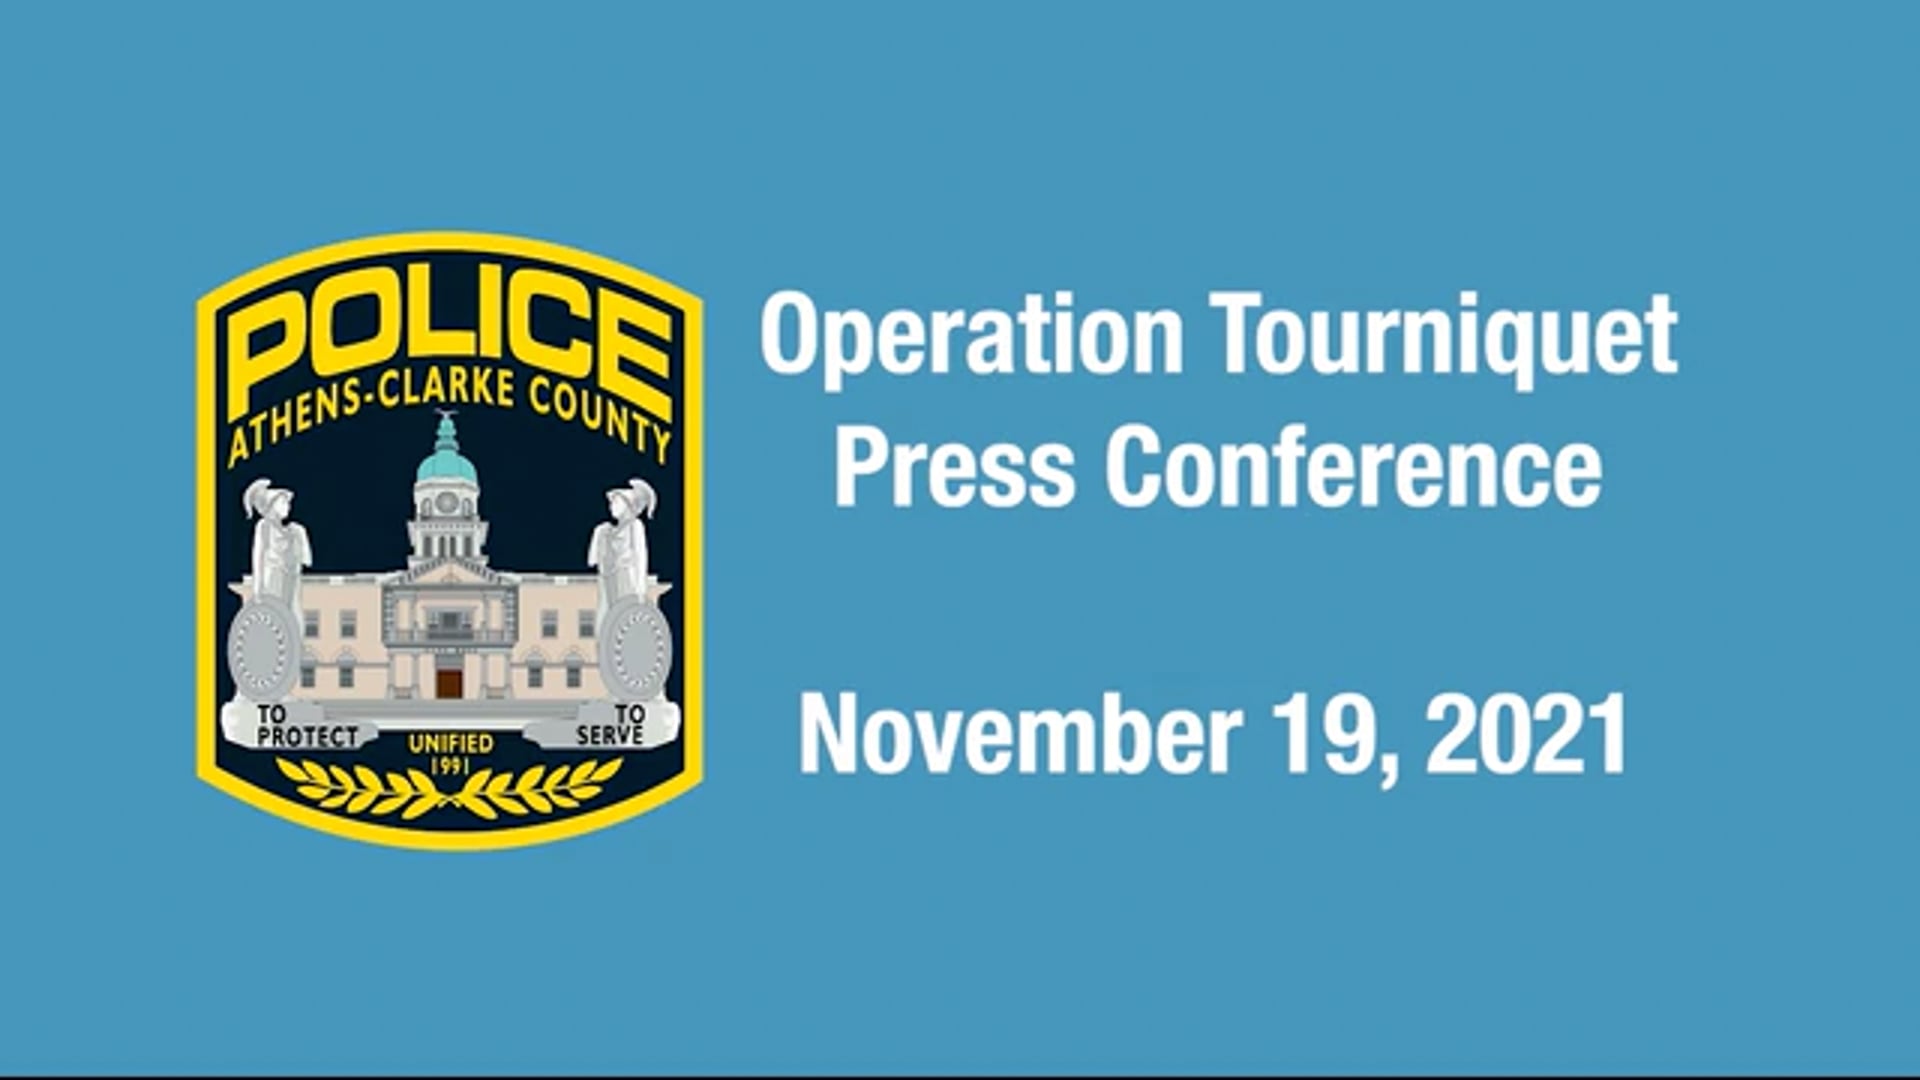 Operation Tourniquet Press Conference: November 19, 2021